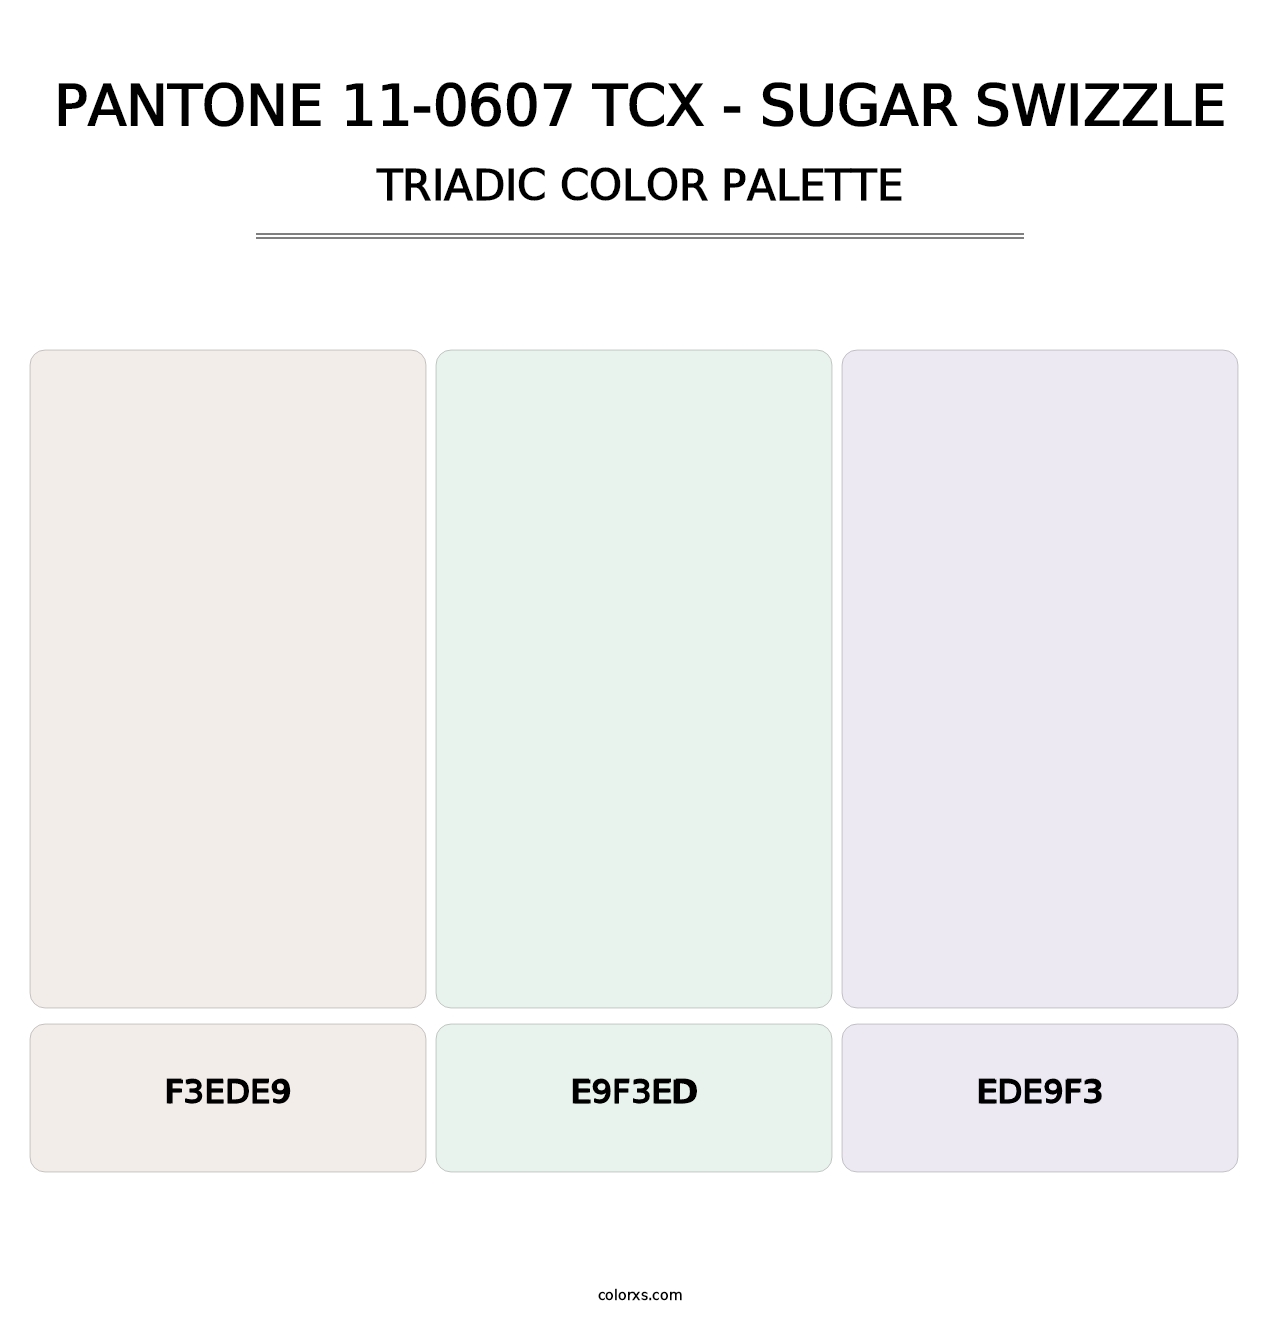 PANTONE 11-0607 TCX - Sugar Swizzle - Triadic Color Palette